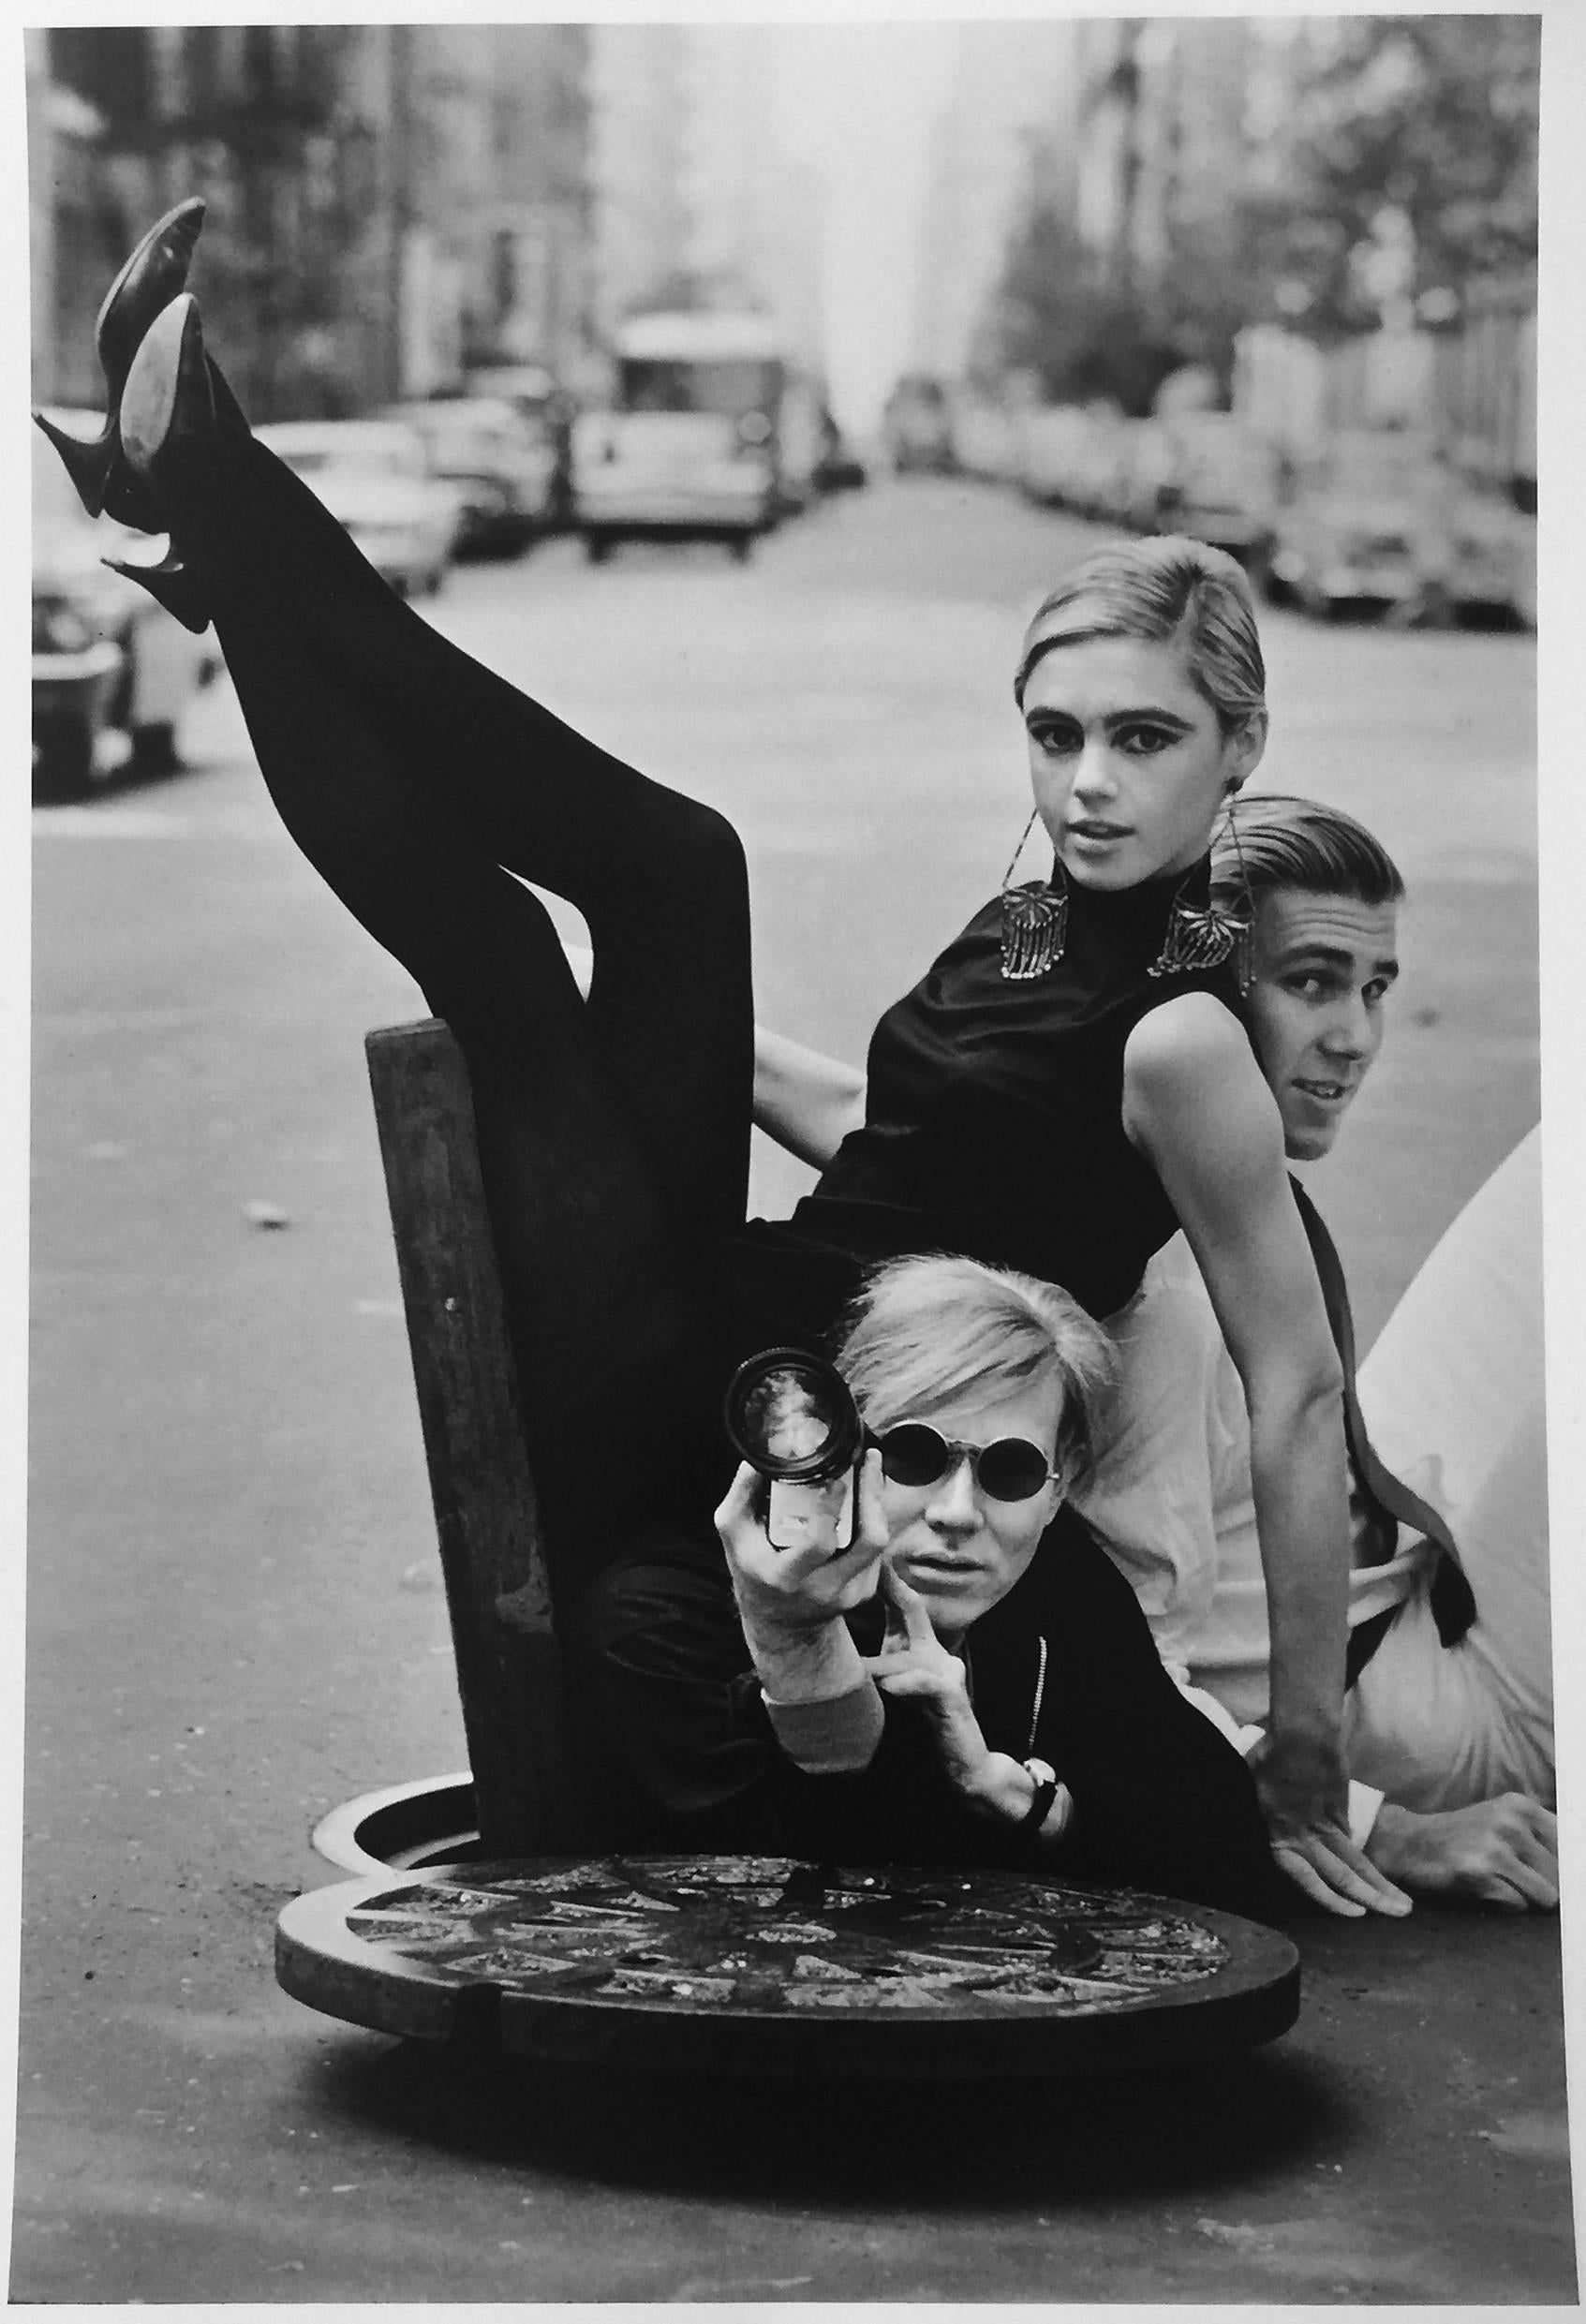 Burt Glinn Black and White Photograph - Andy Warhol, Edie Sedgwick, Chuck Wein, Photograph of Pop Art Superstars 1960s 